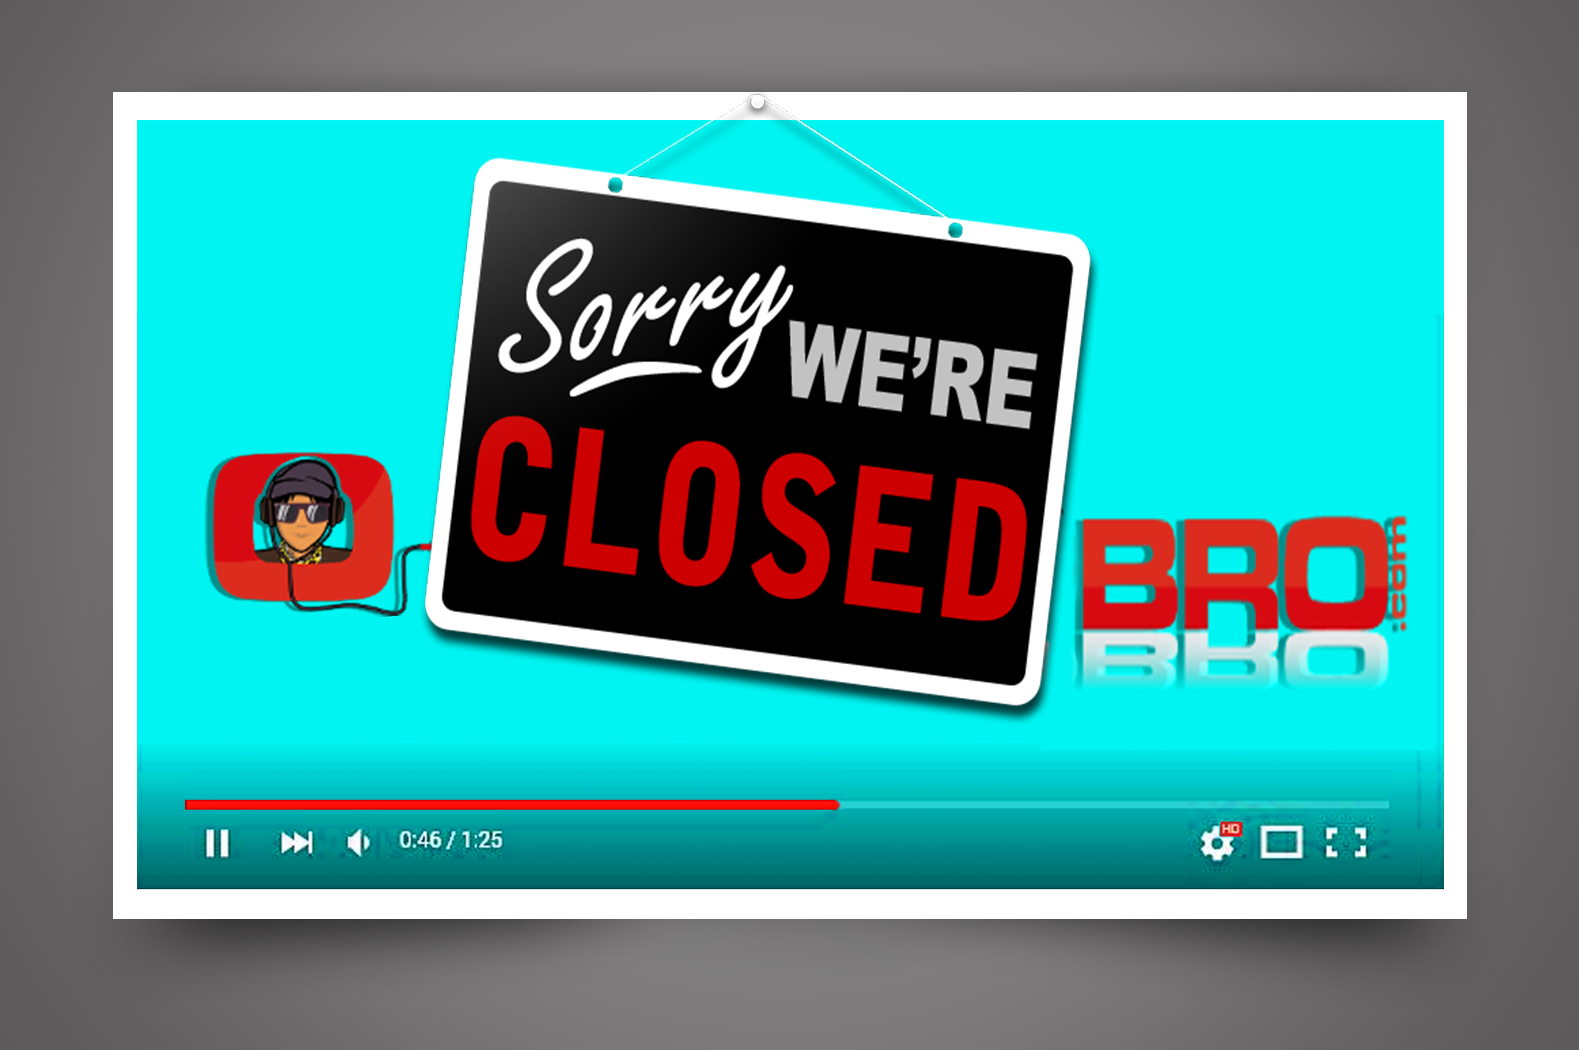 SaveClipBro - Sorry We're Closed Bro - SaveClipBro Shuts down